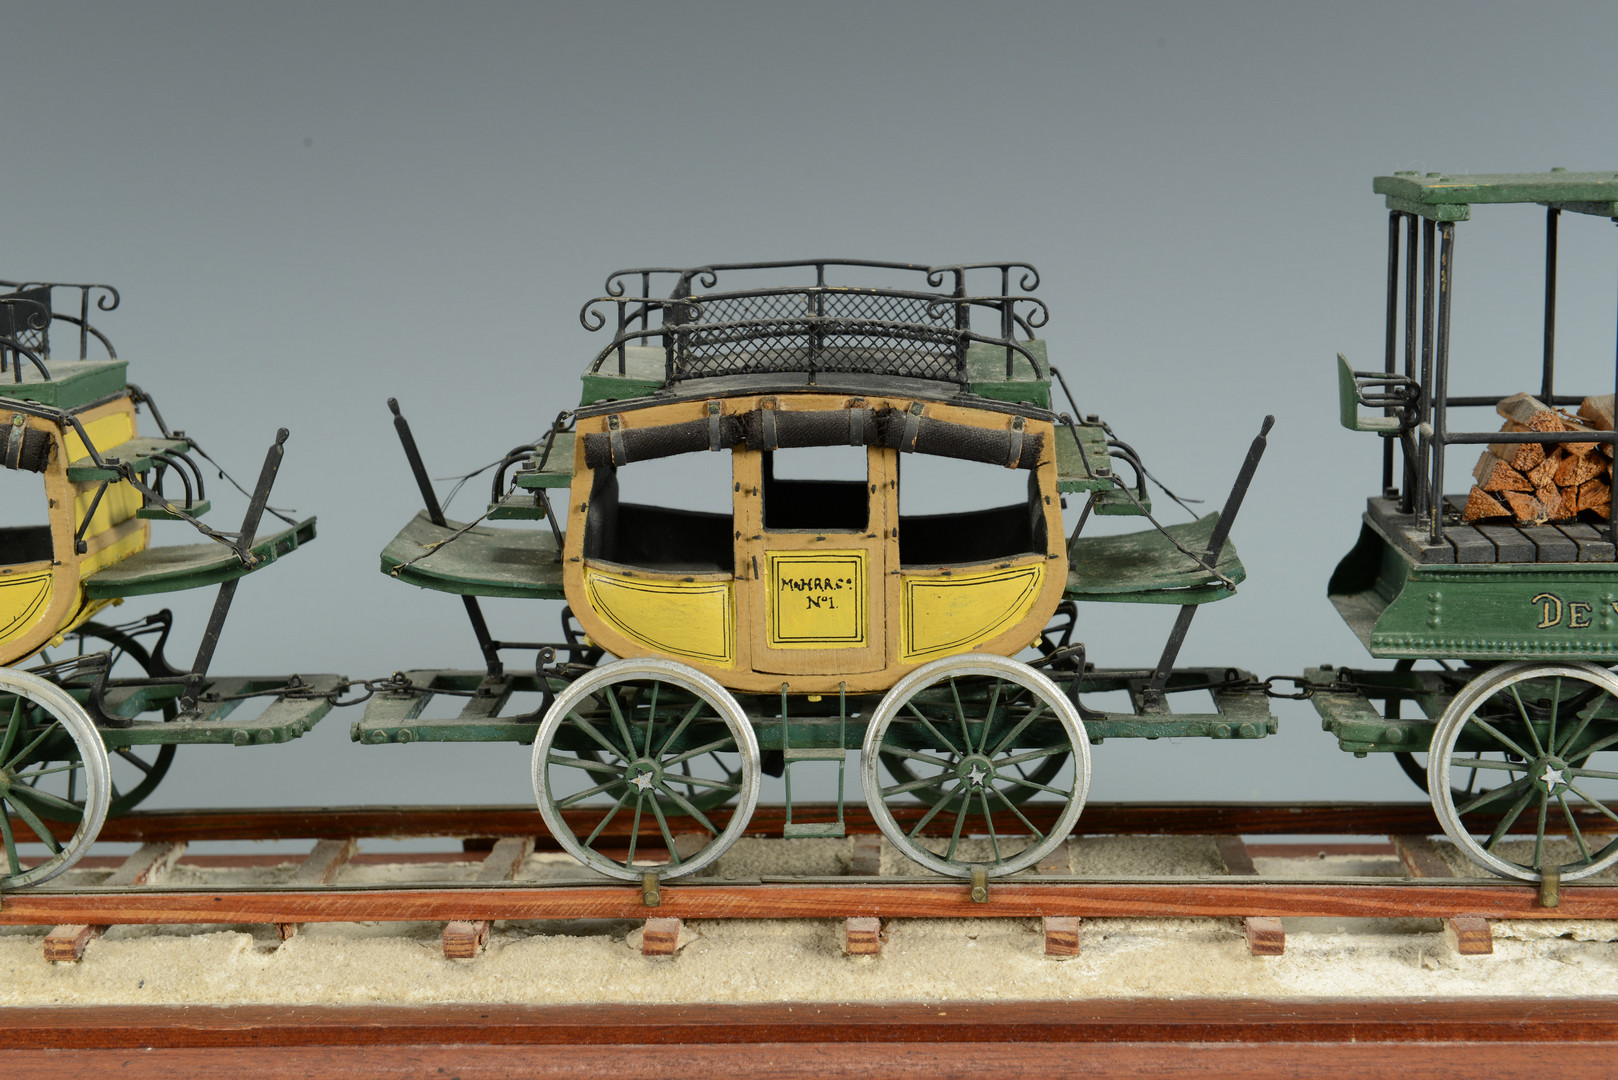 Lot 461: 1933 Dewitt Clinton Model Passenger Locomotive, Aw